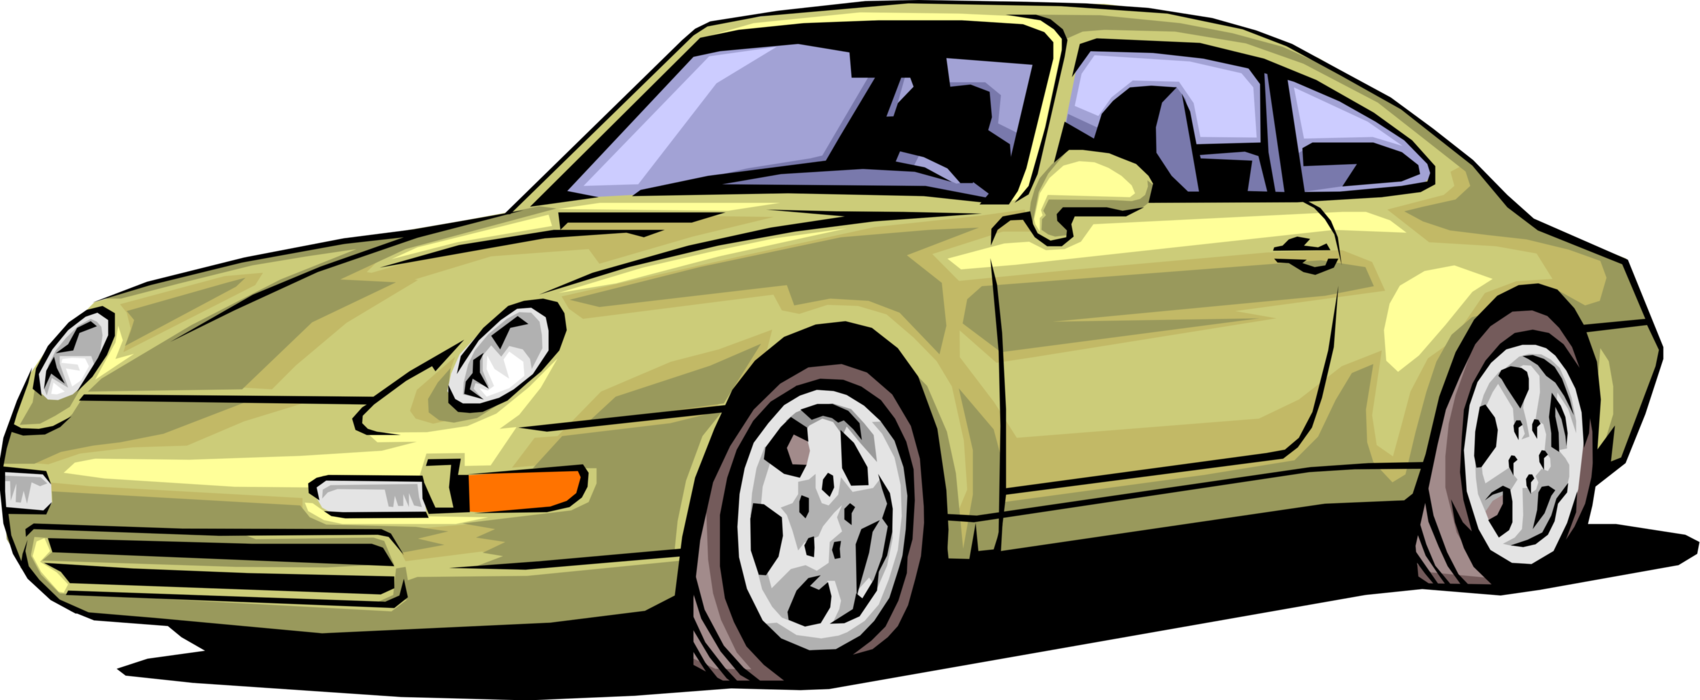 Vector Illustration of Porsche Sports Car Automobile Motor Vehicle